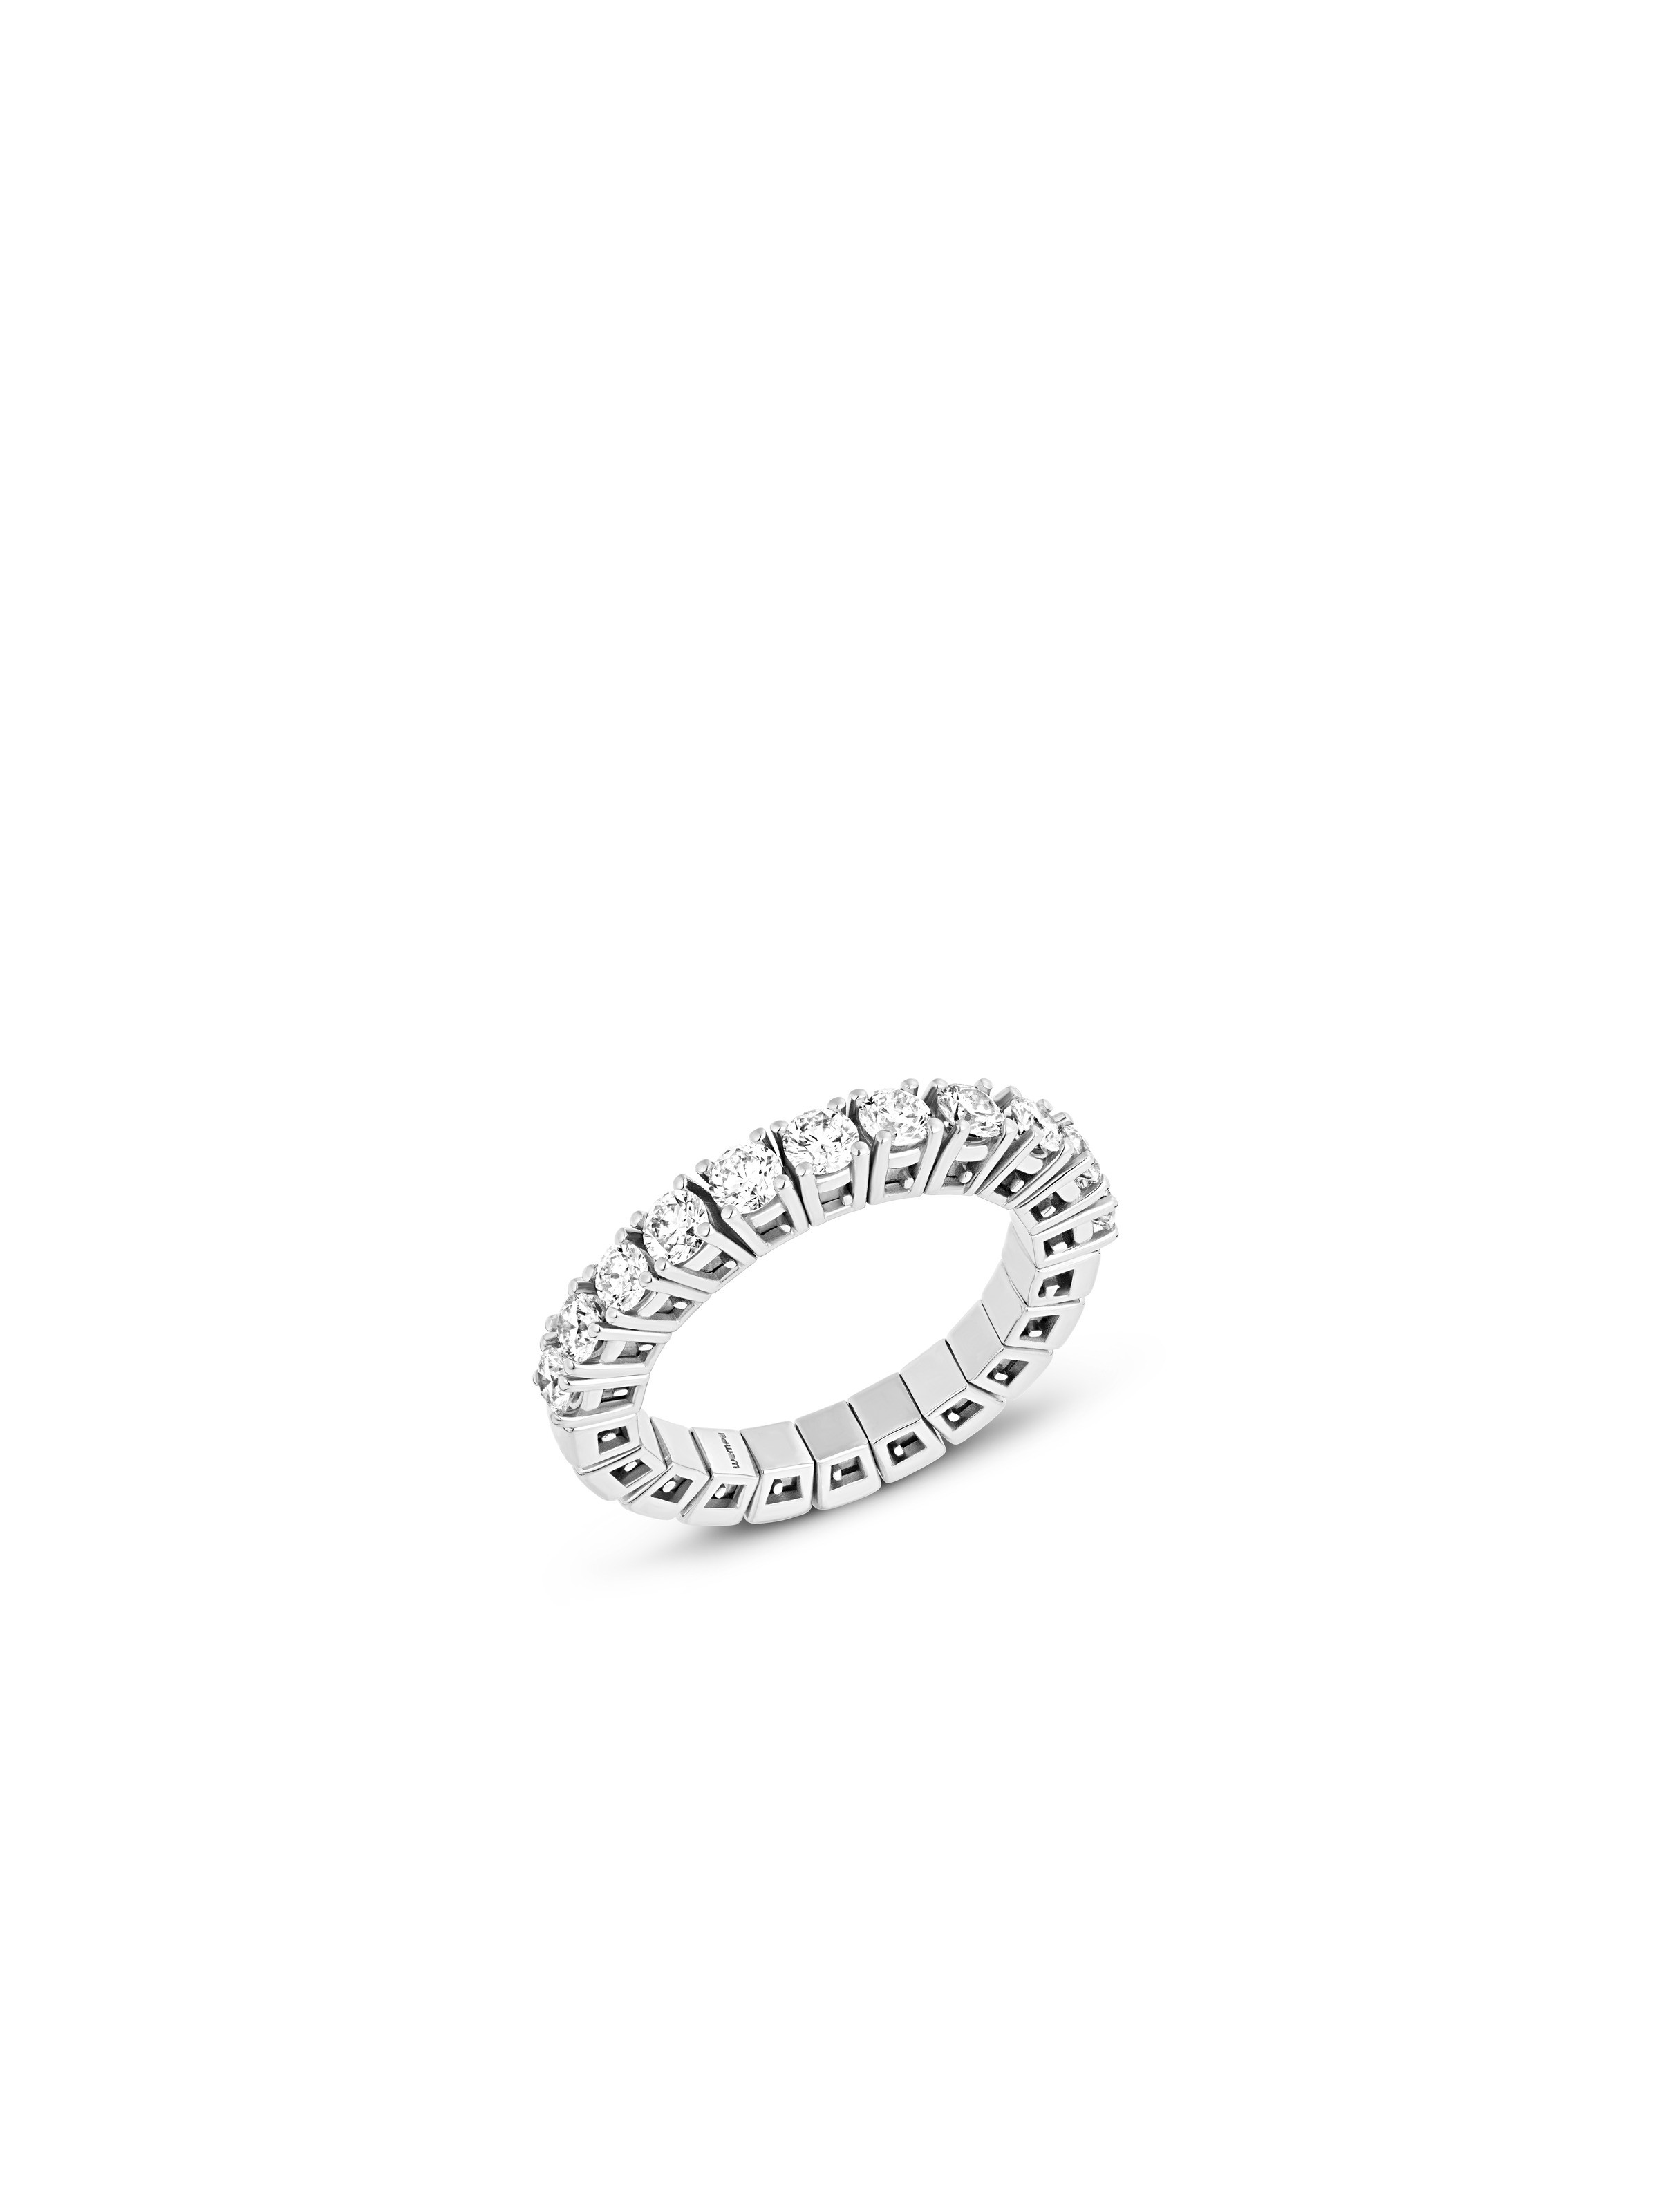 Flexible Everloving Renaissance ring | By Wempe Classics | Wempe Jewelers